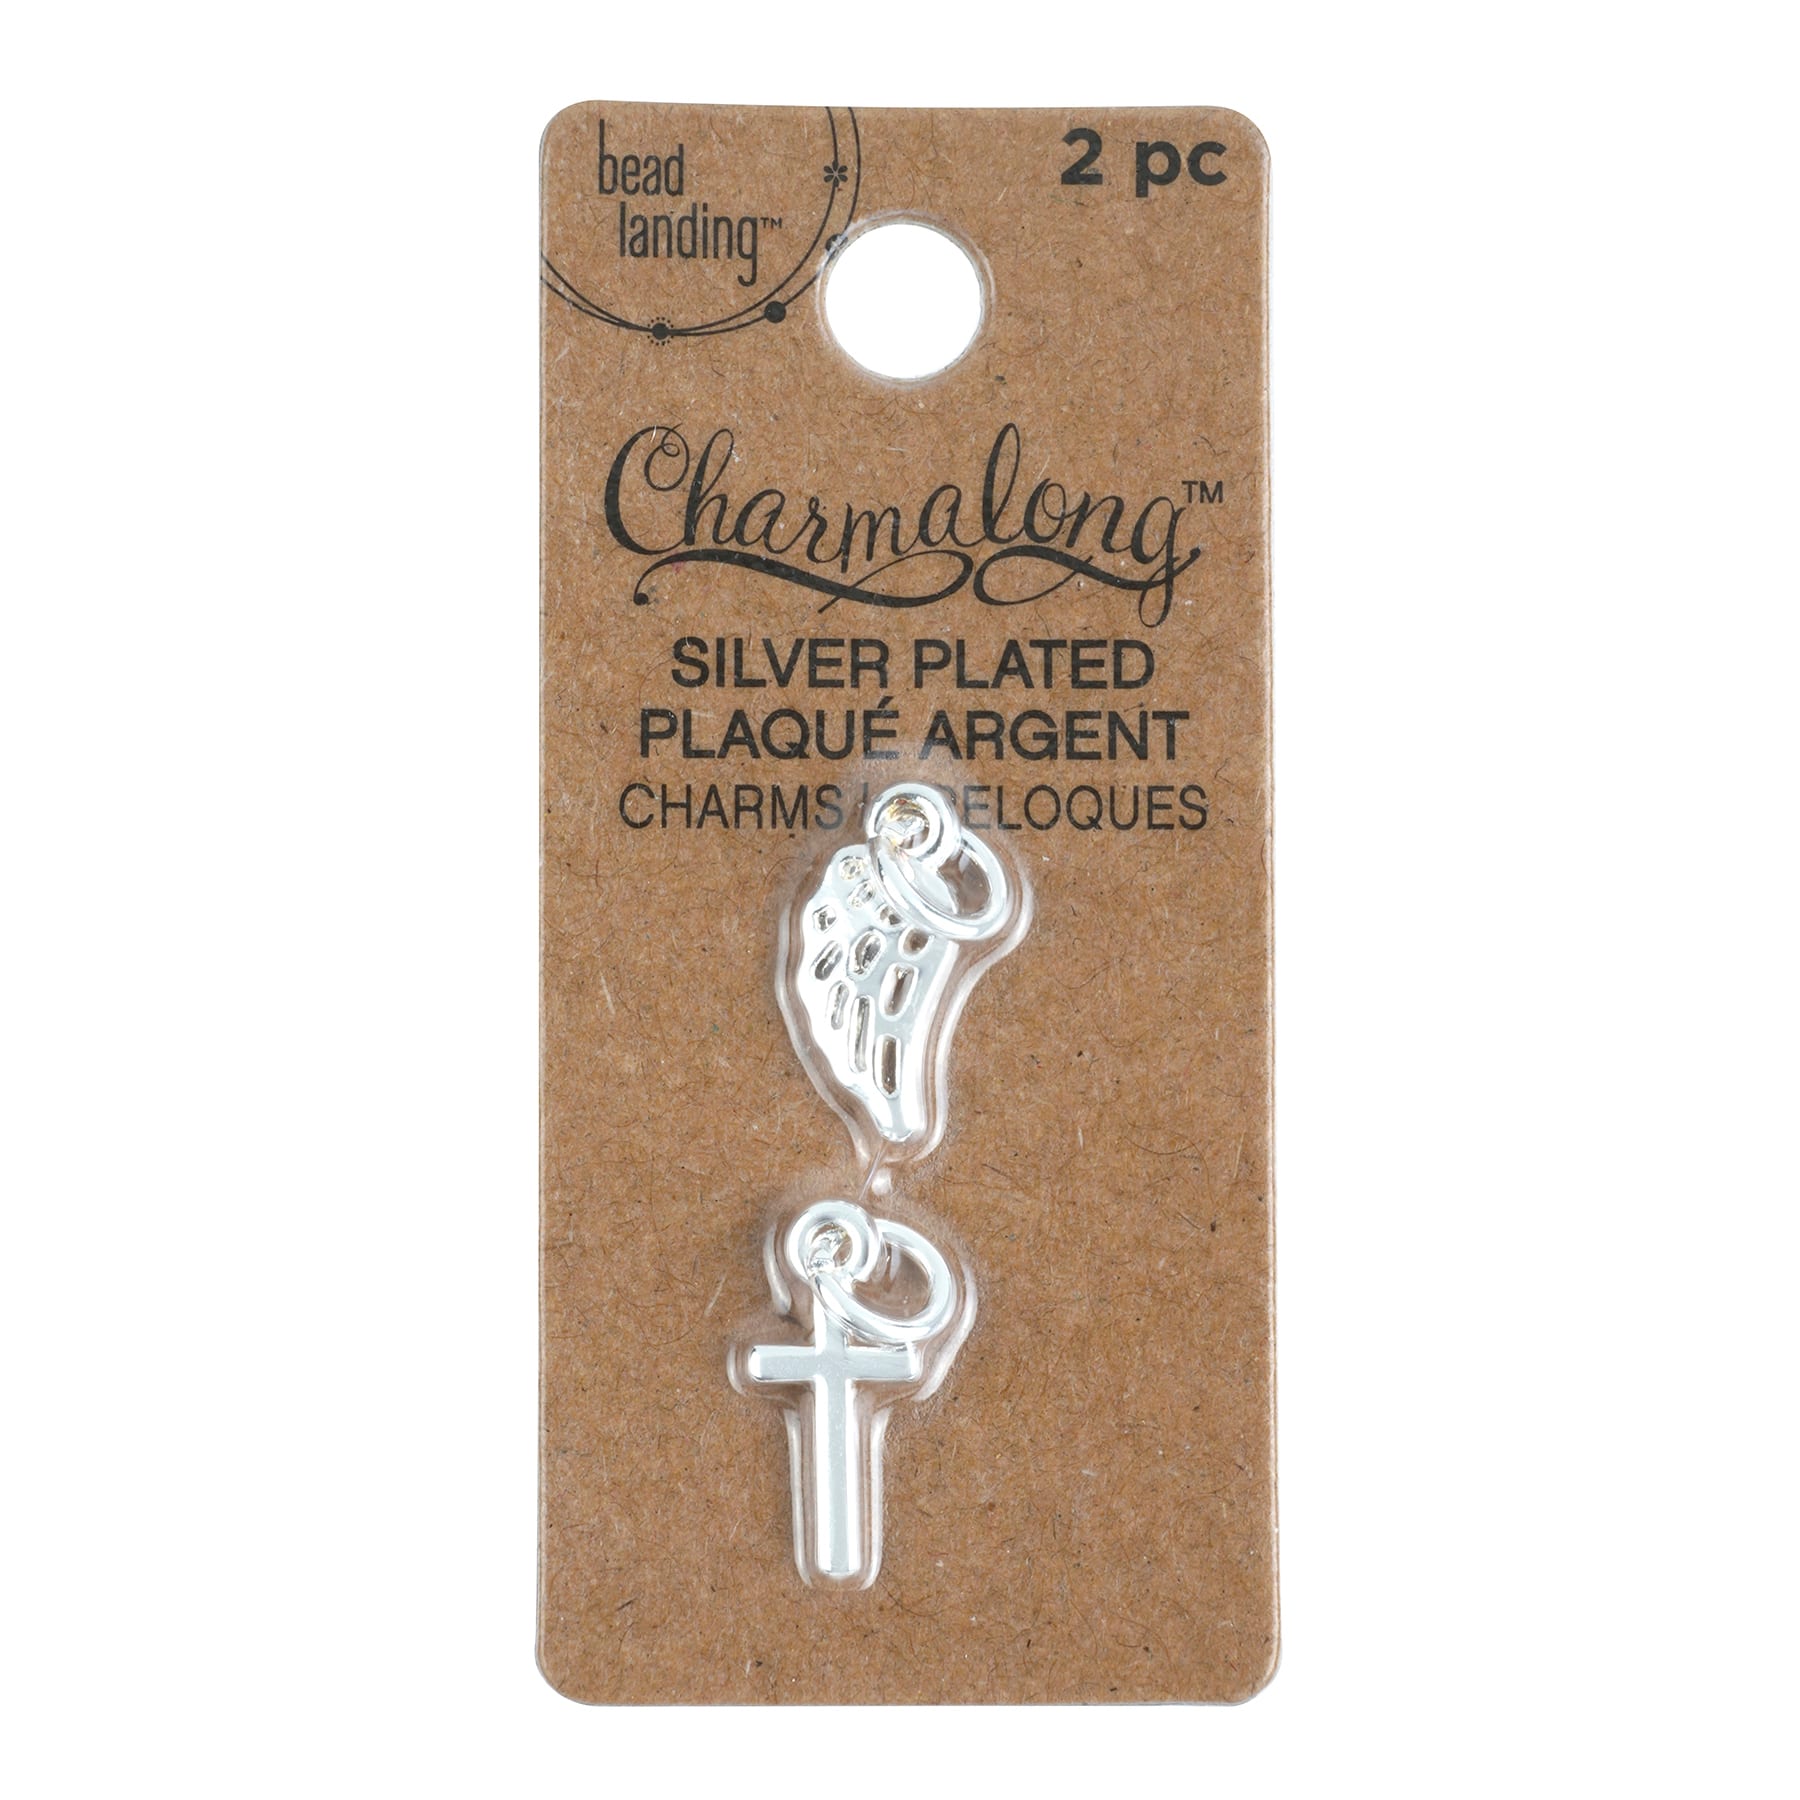 Charmalong&#x2122; Silver Wing &#x26; Cross Charms by Bead Landing&#x2122;